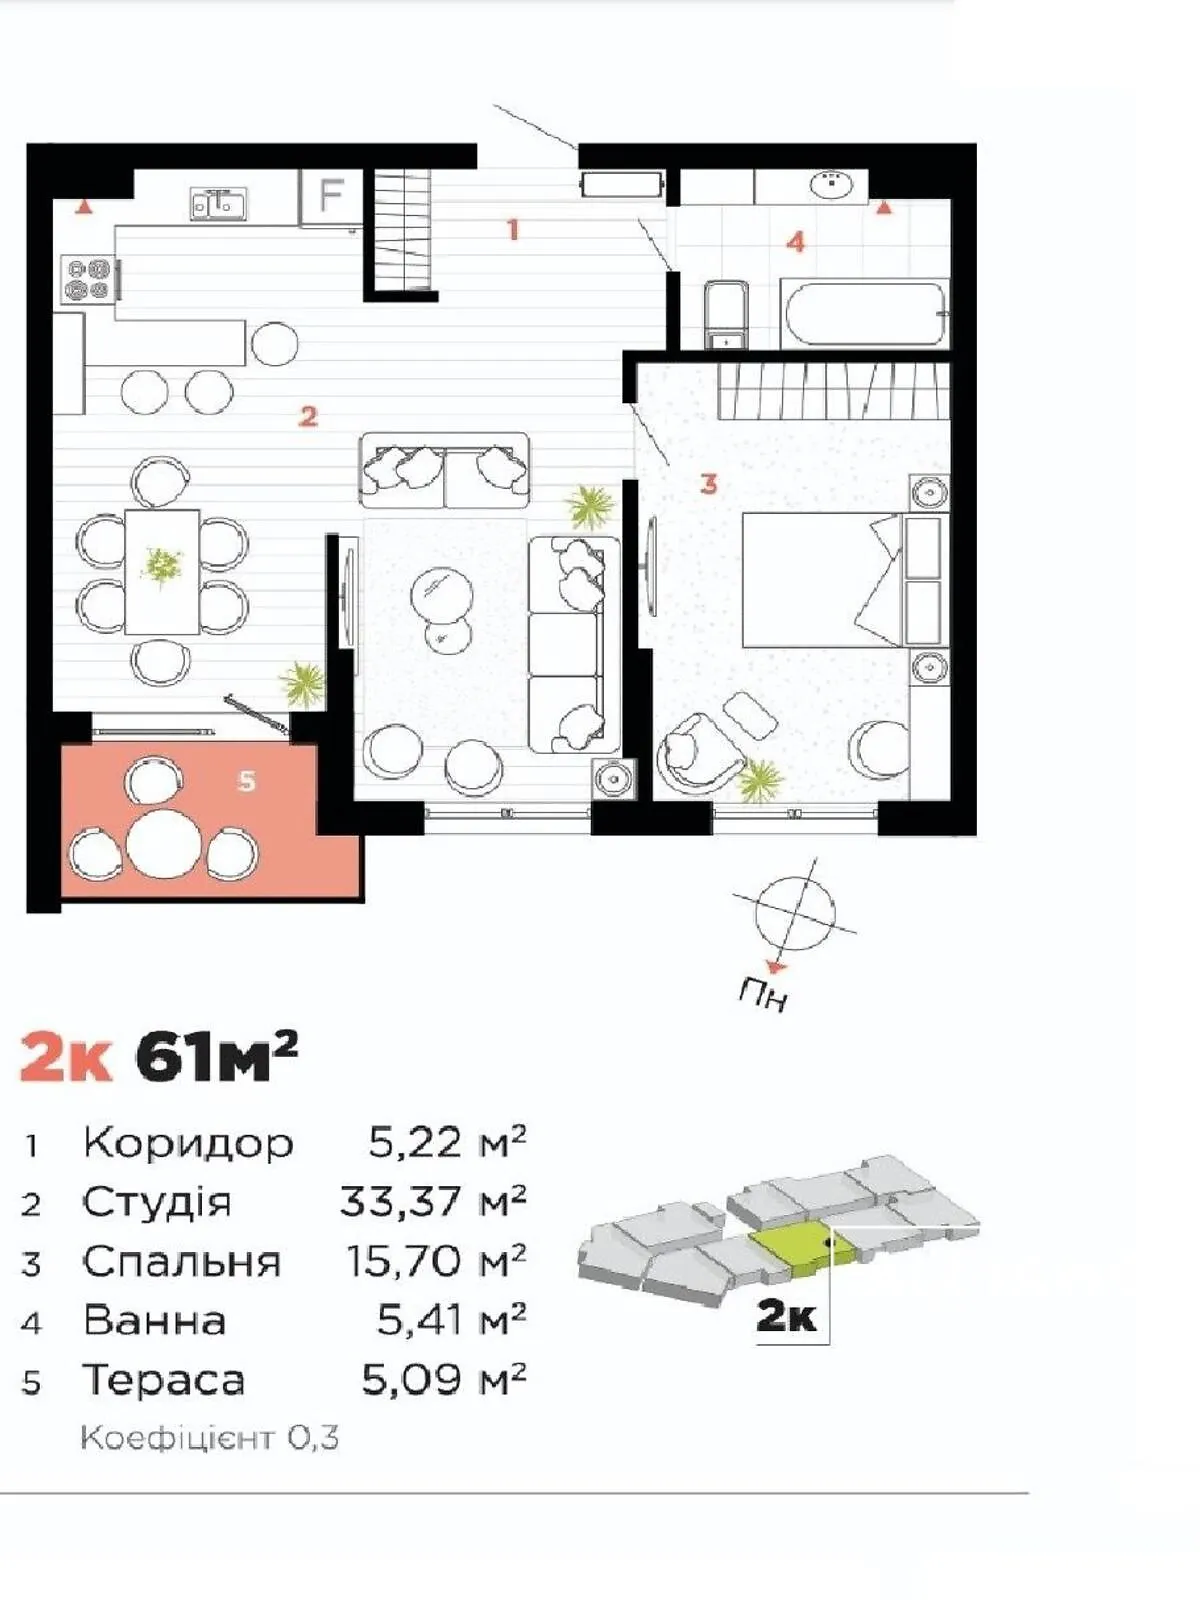 Продается 2-комнатная квартира 61 кв. м в Ивано-Франковске - фото 2